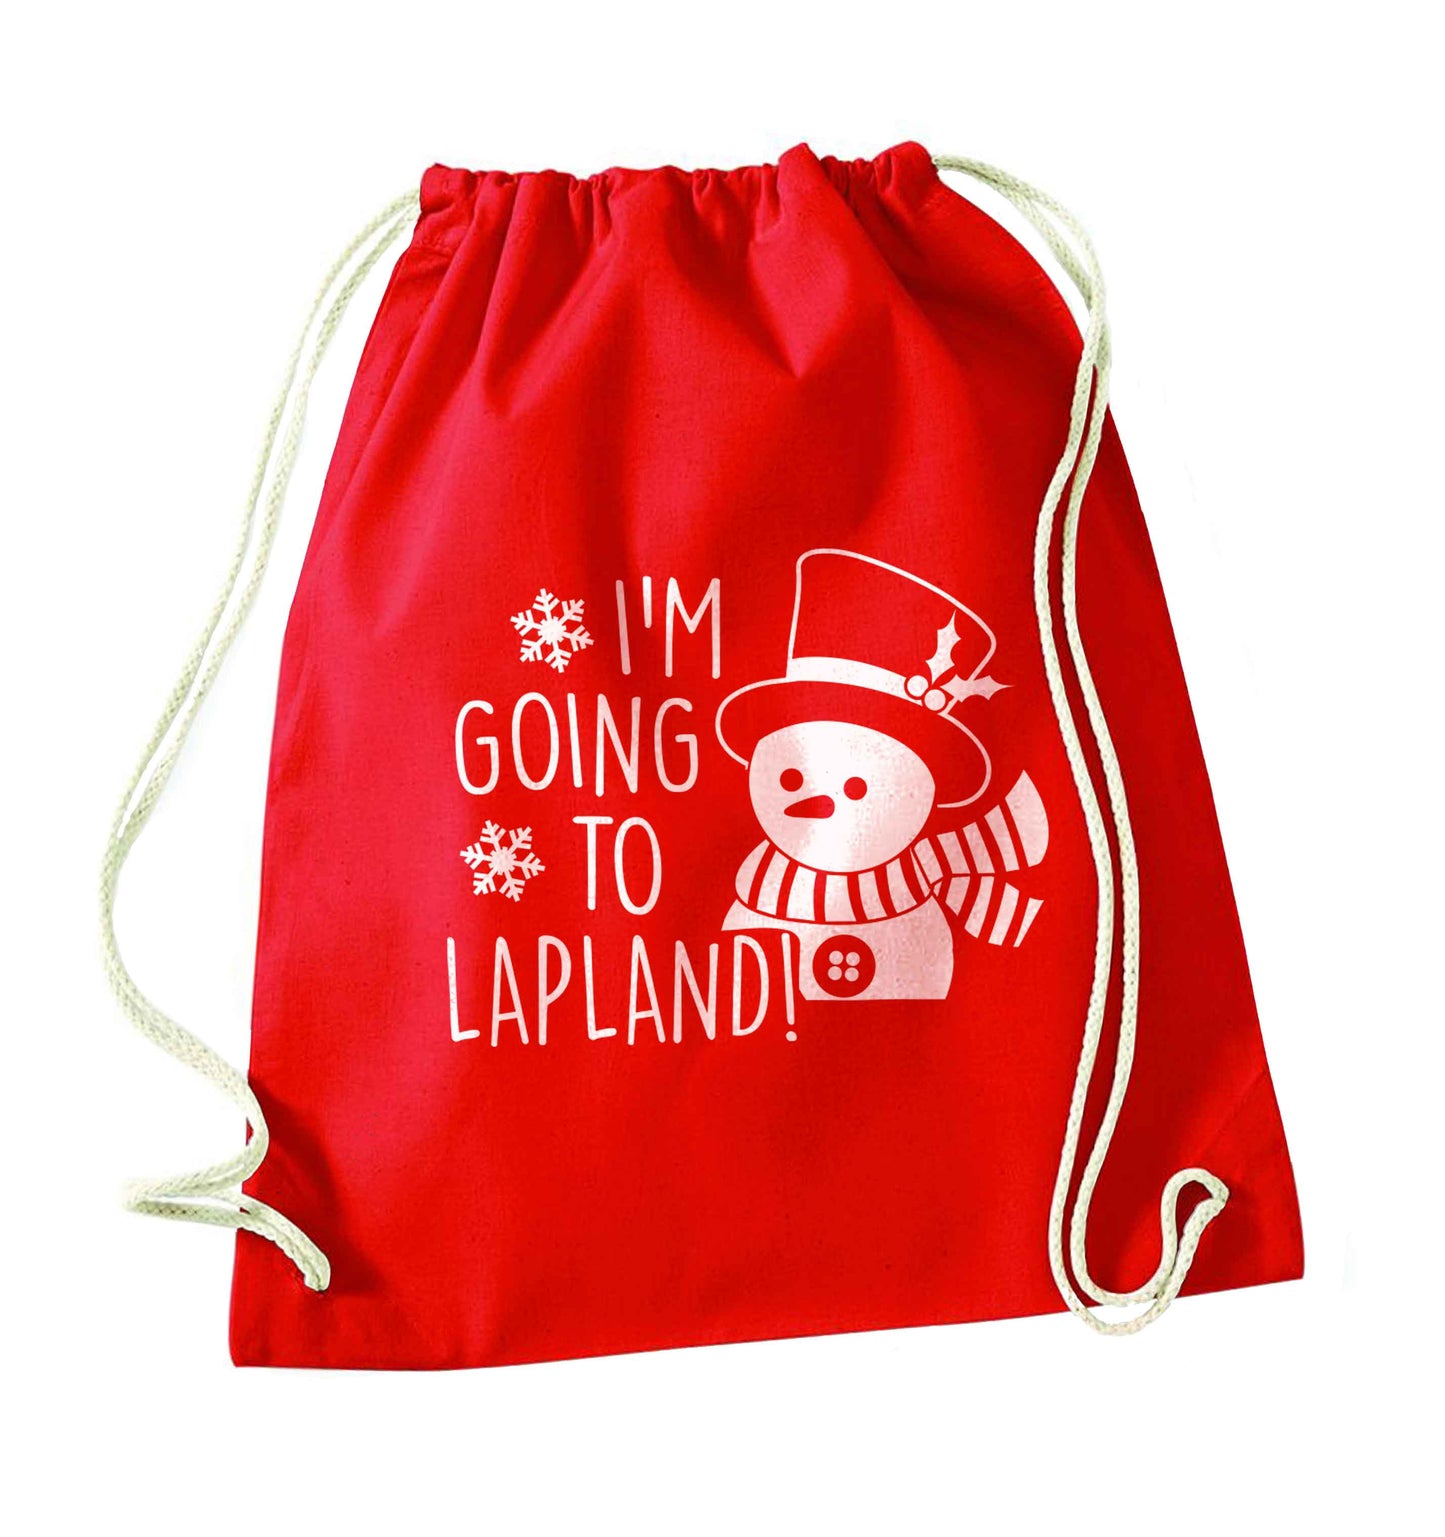 I'm going to Lapland red drawstring bag 